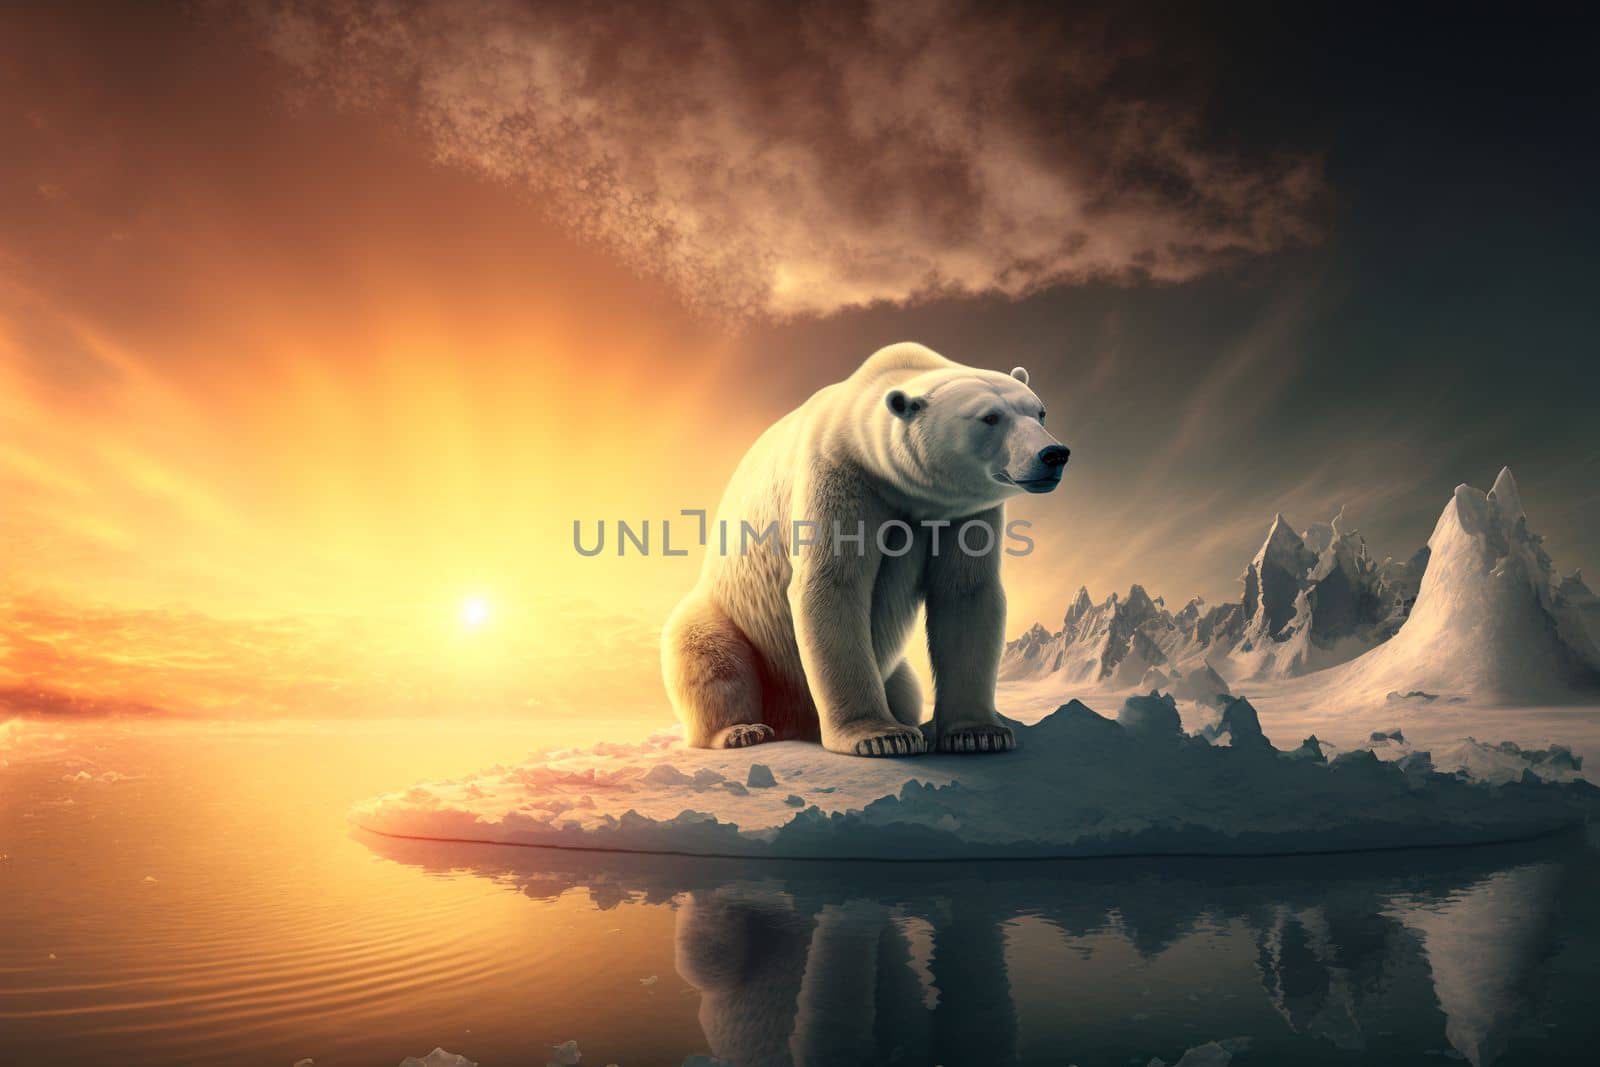 global warming bear on an ice floe. Art image by gulyaevstudio